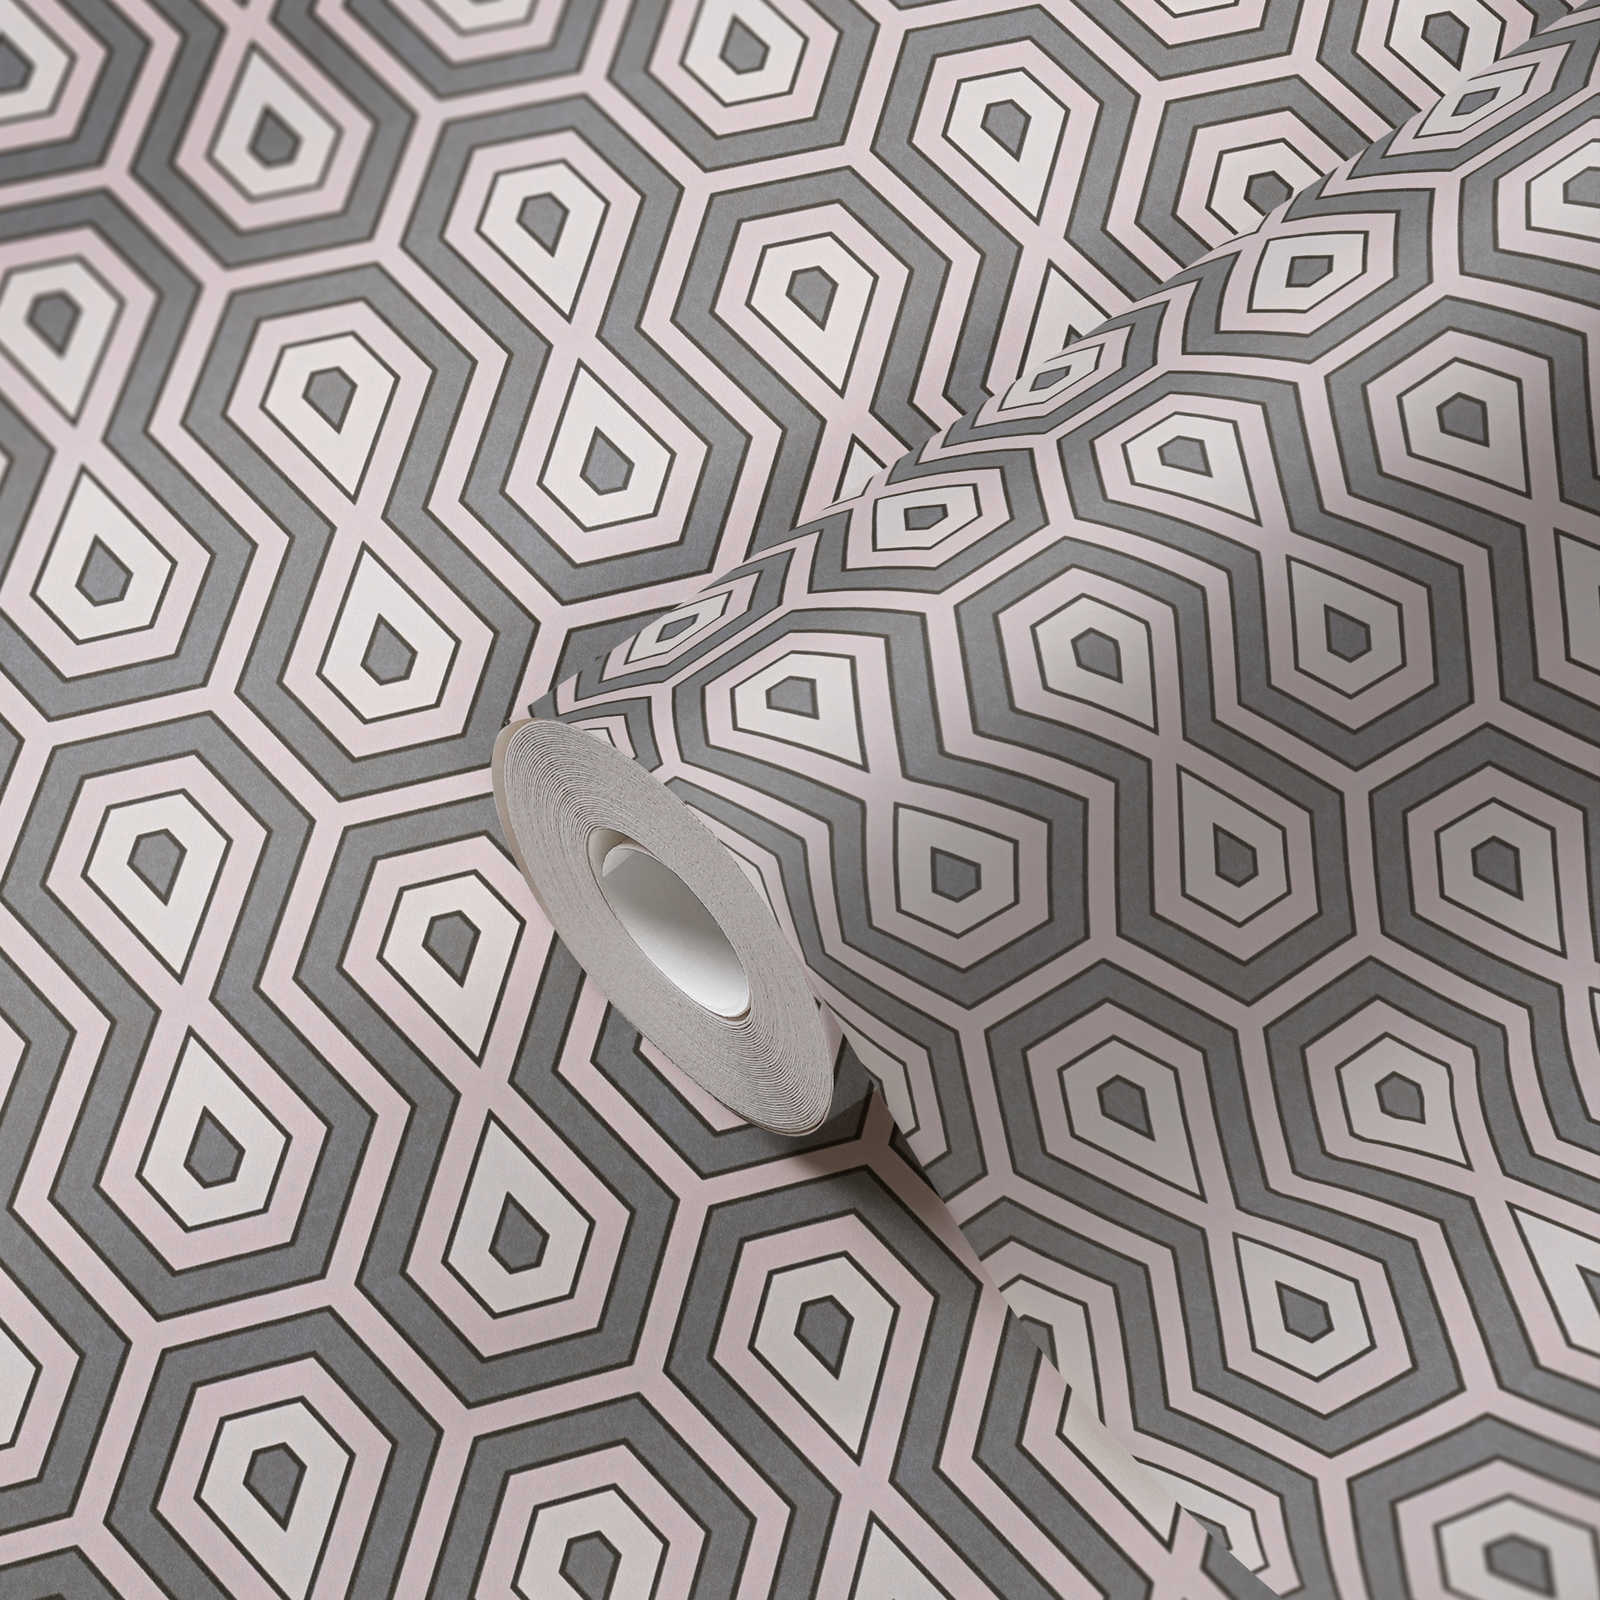             Tapete Metallic Retro Muster mit 70er Grafik Design – Rosa, Grau, Weiß
        